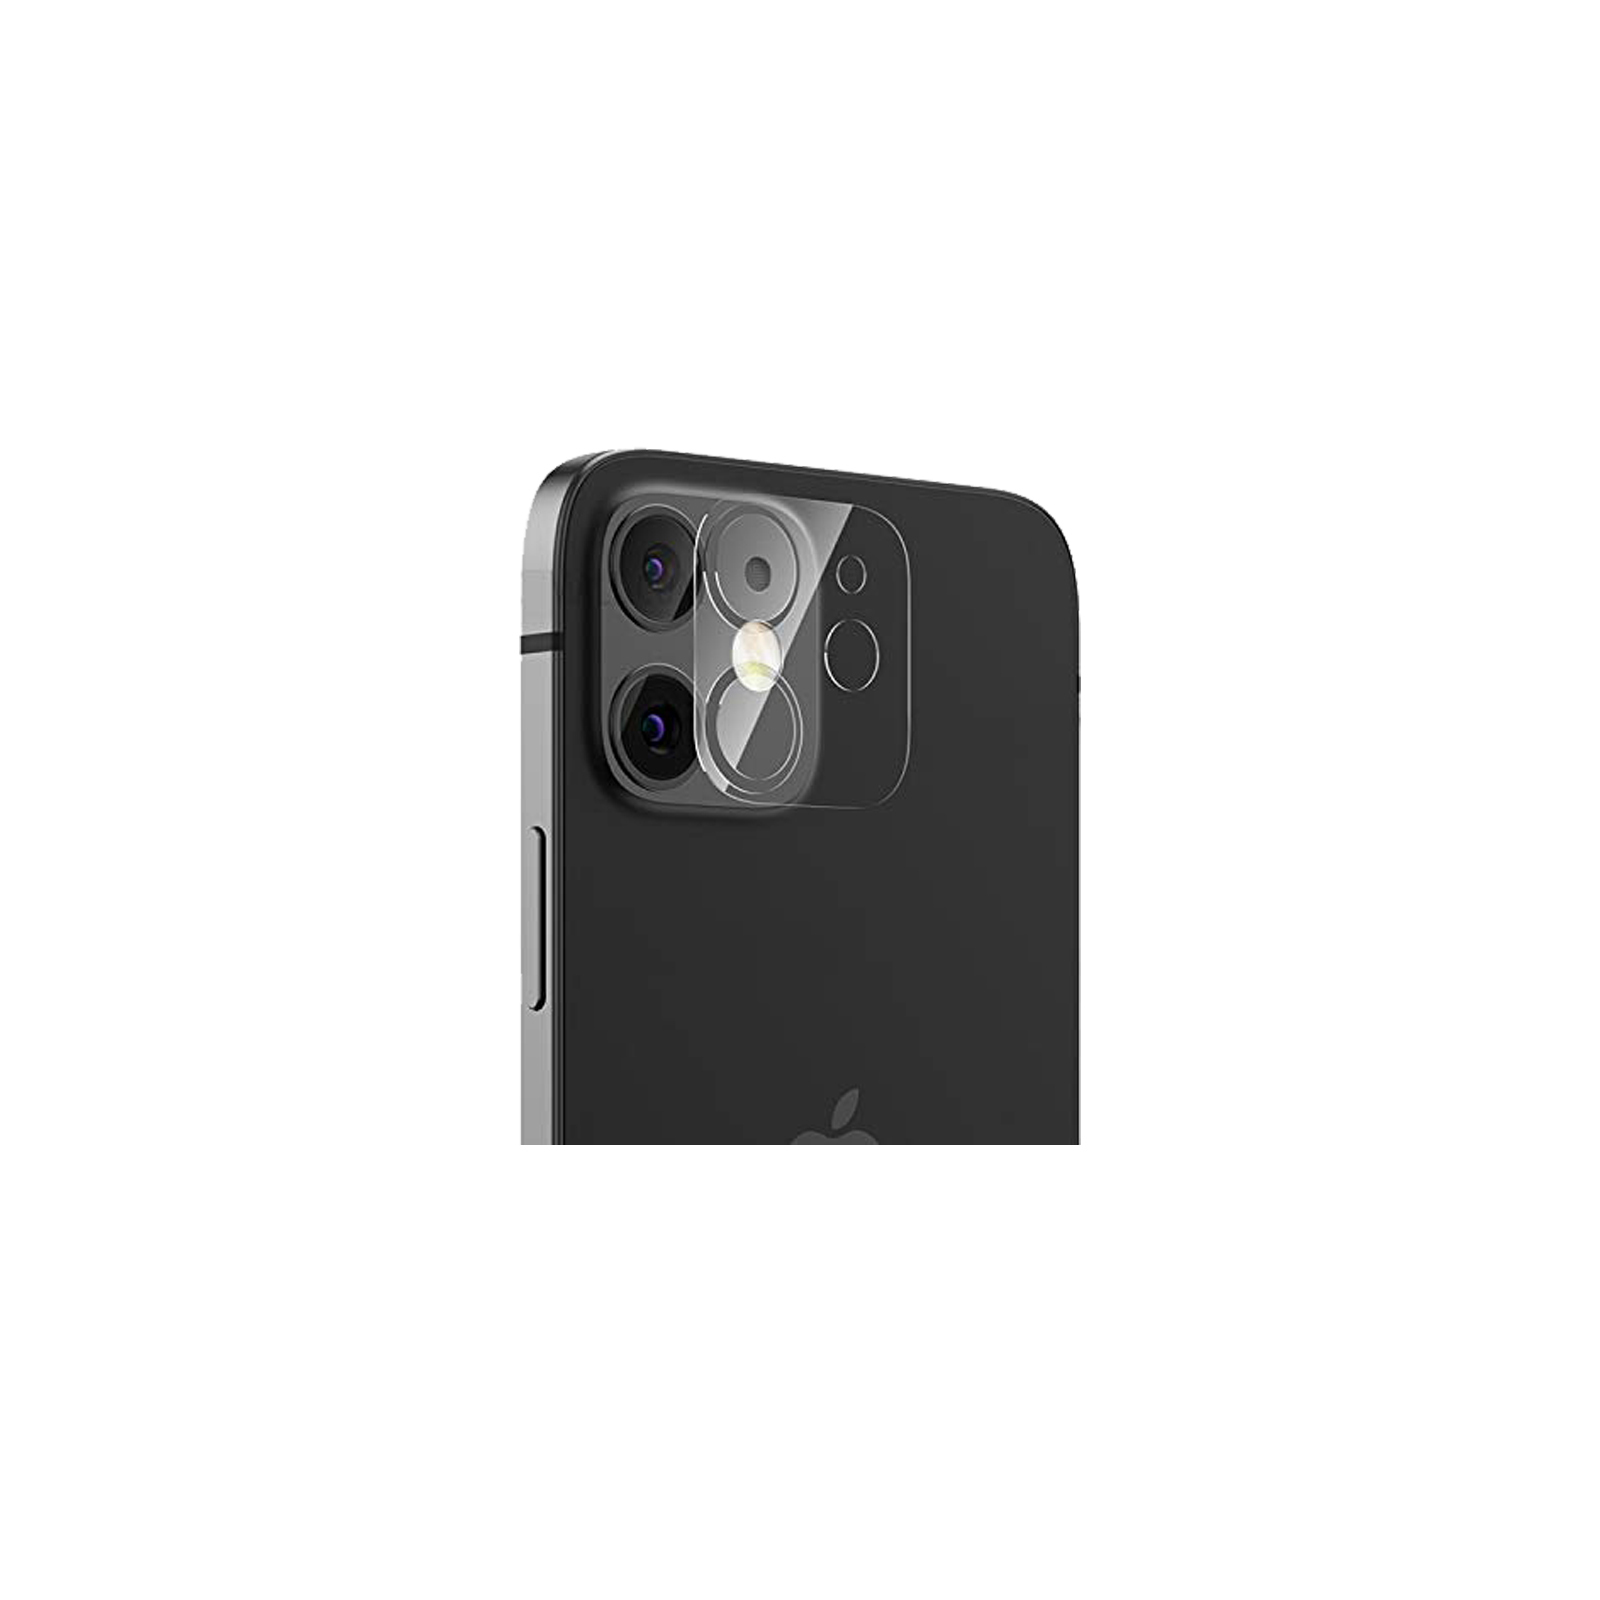 Kinglas iPhone 12 Mini Lens Protector [Brand New]